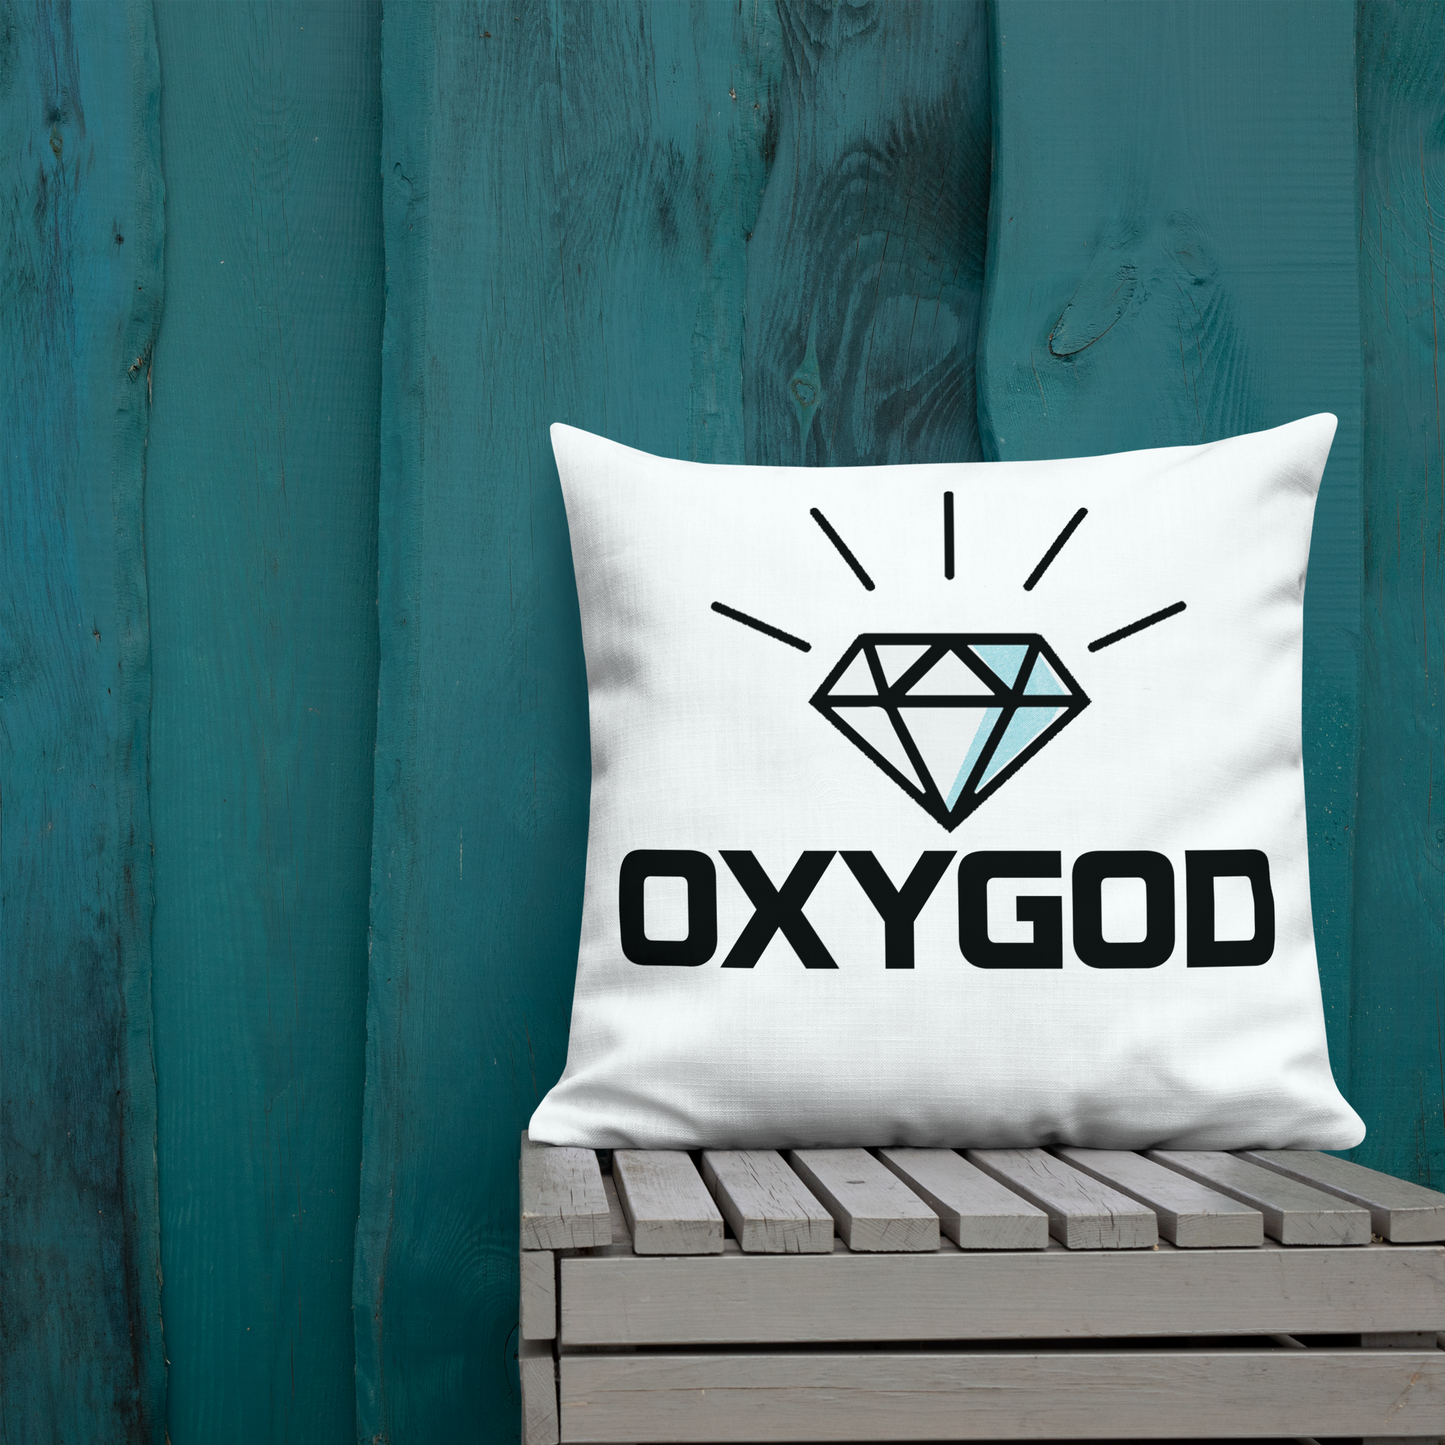 OXYGOD - PREMIUM PILLOW